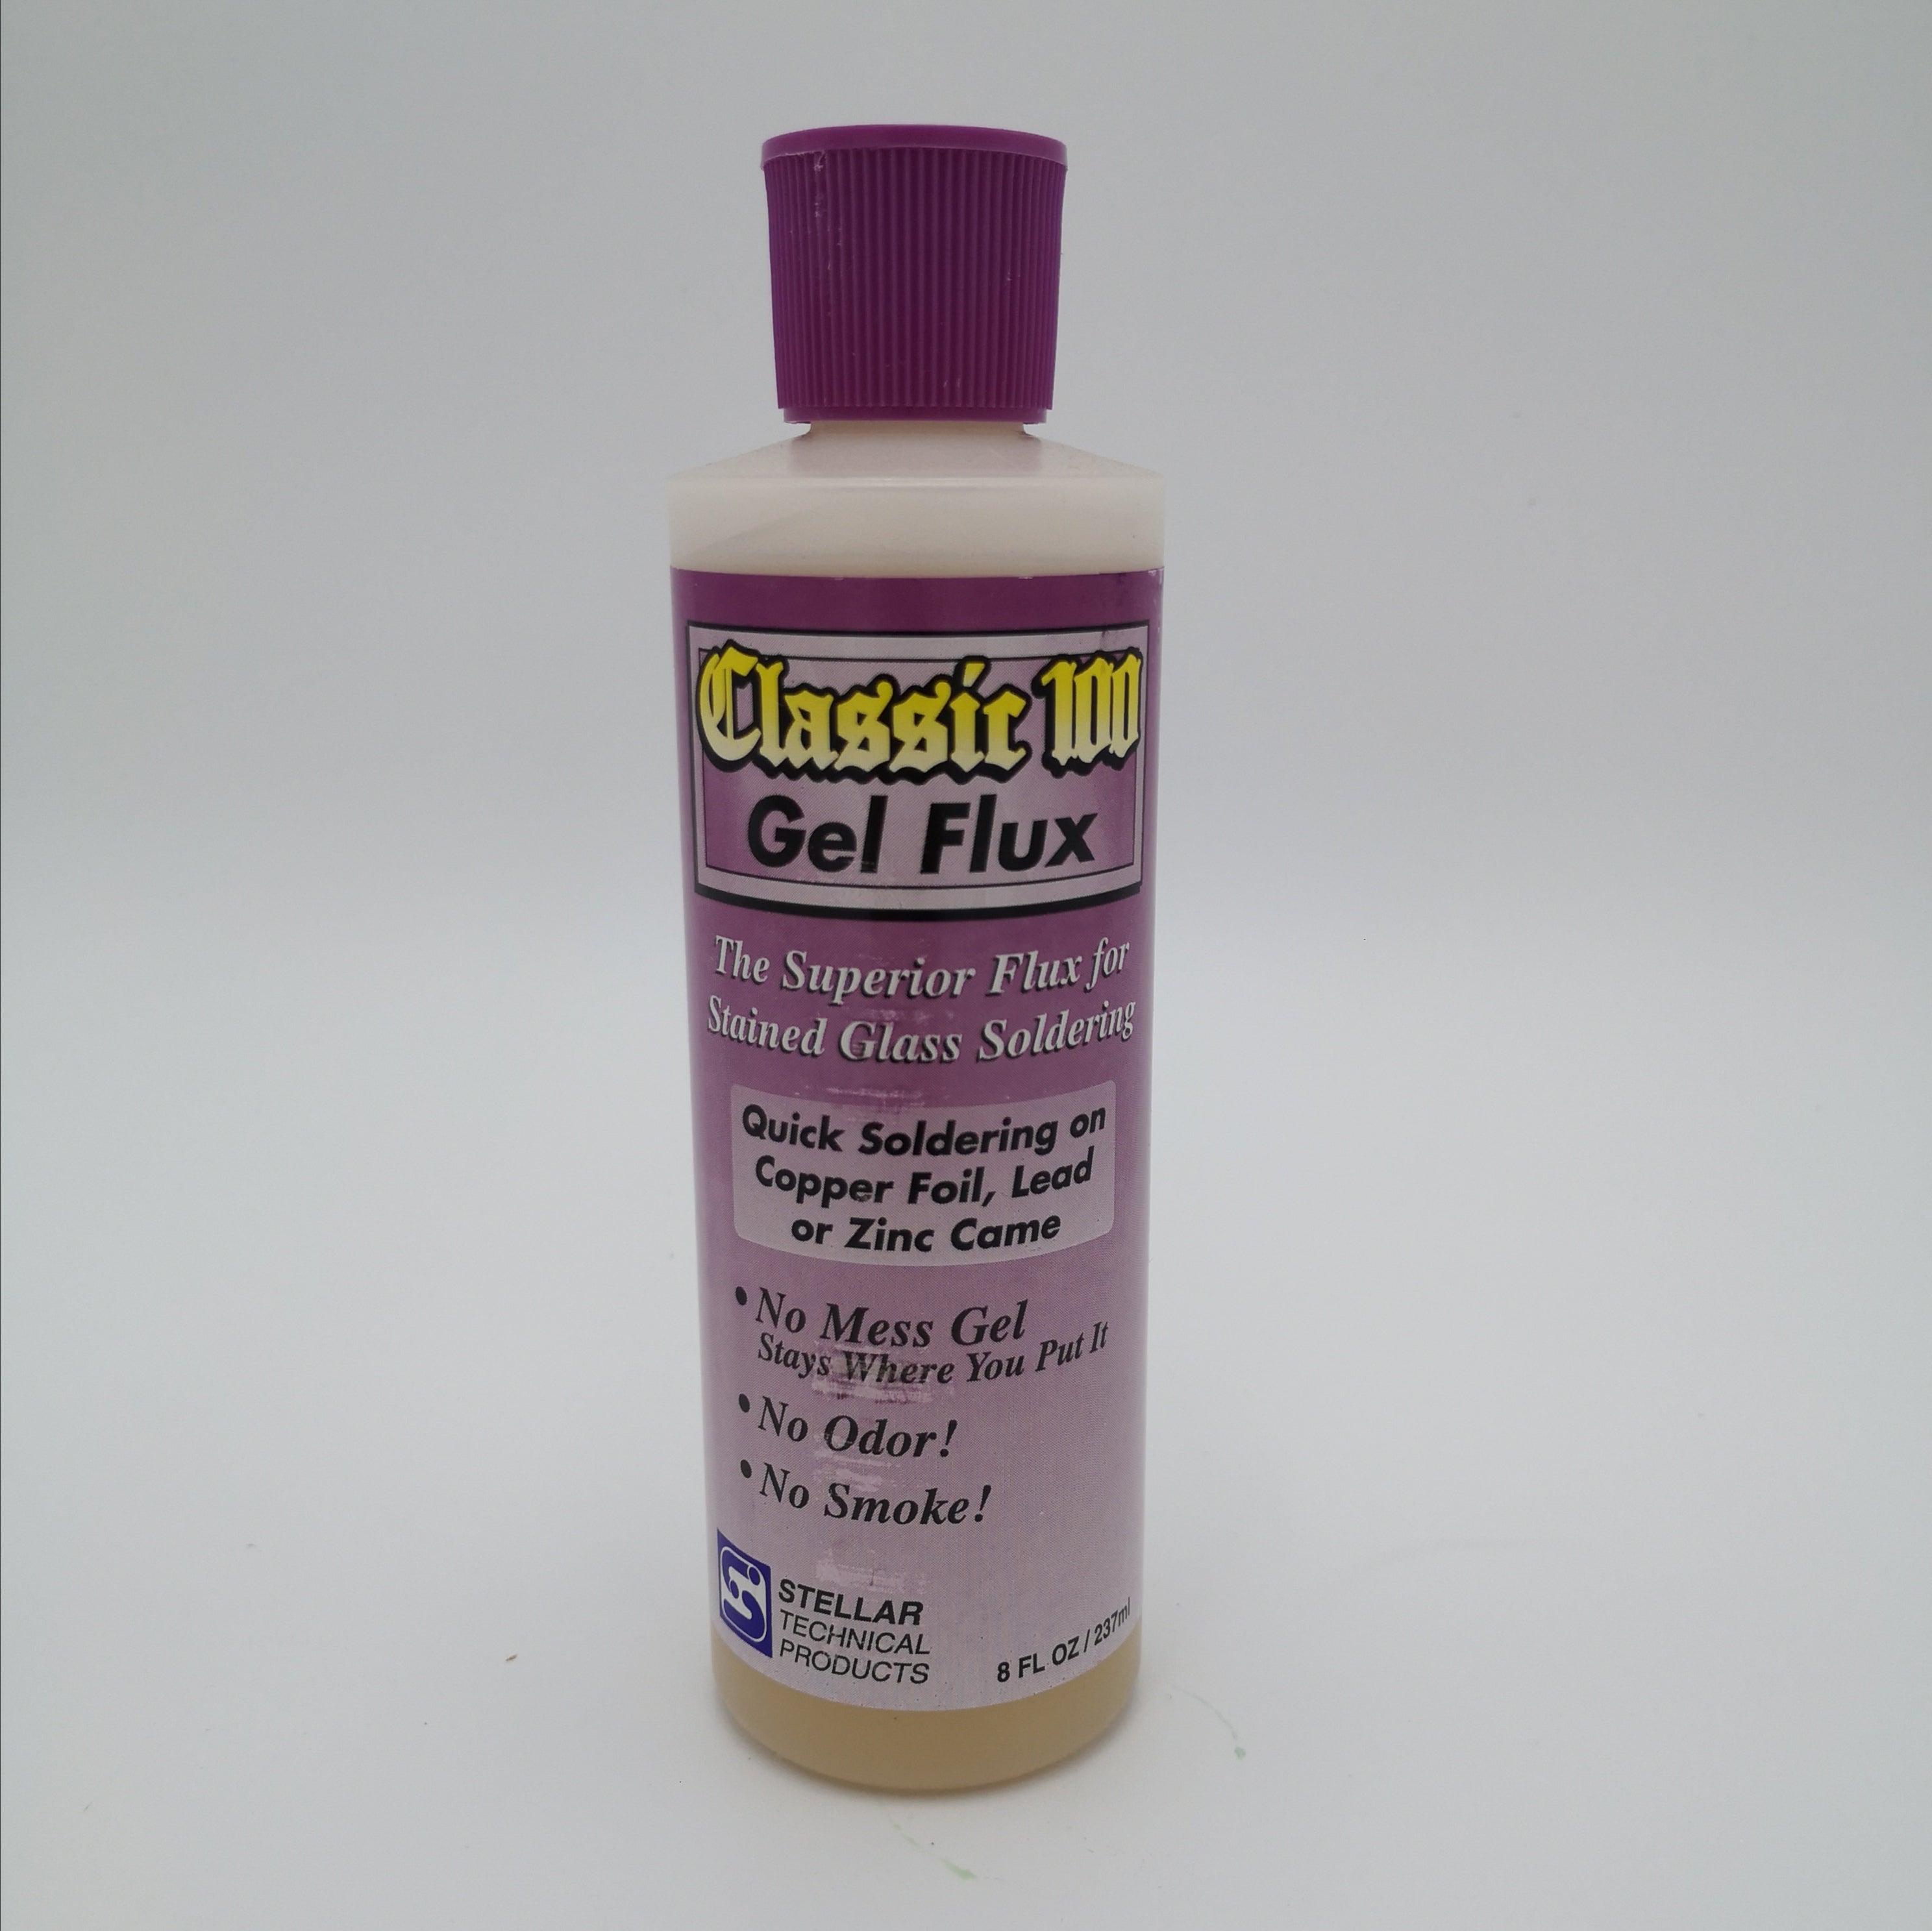 Classic 100 Gel Flux 8oz – Lucent Glass